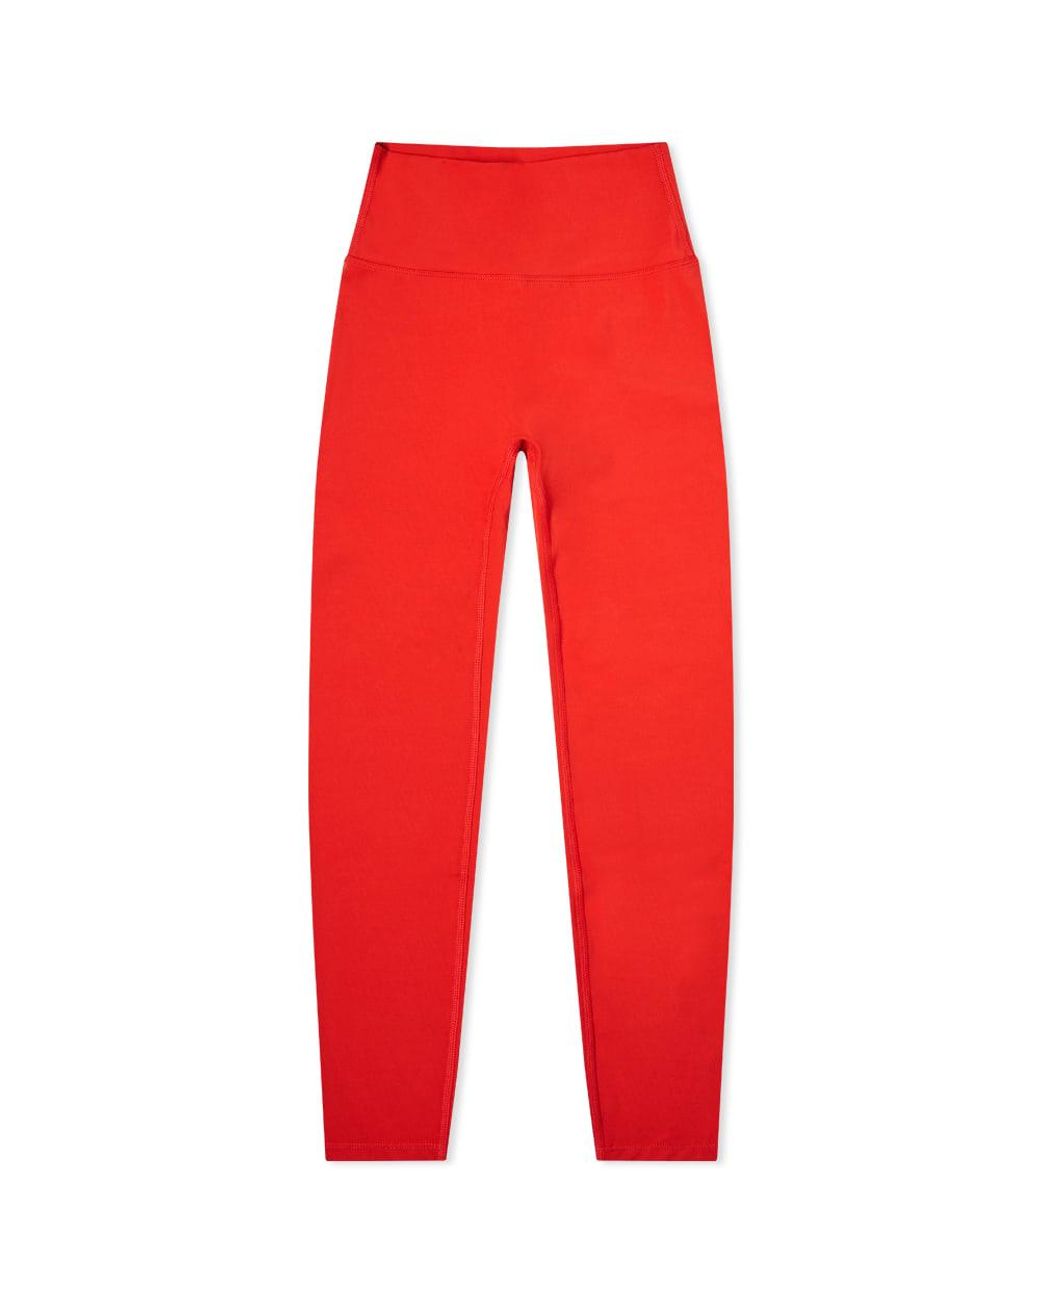 ADANOLA Ultimate leggings in Red